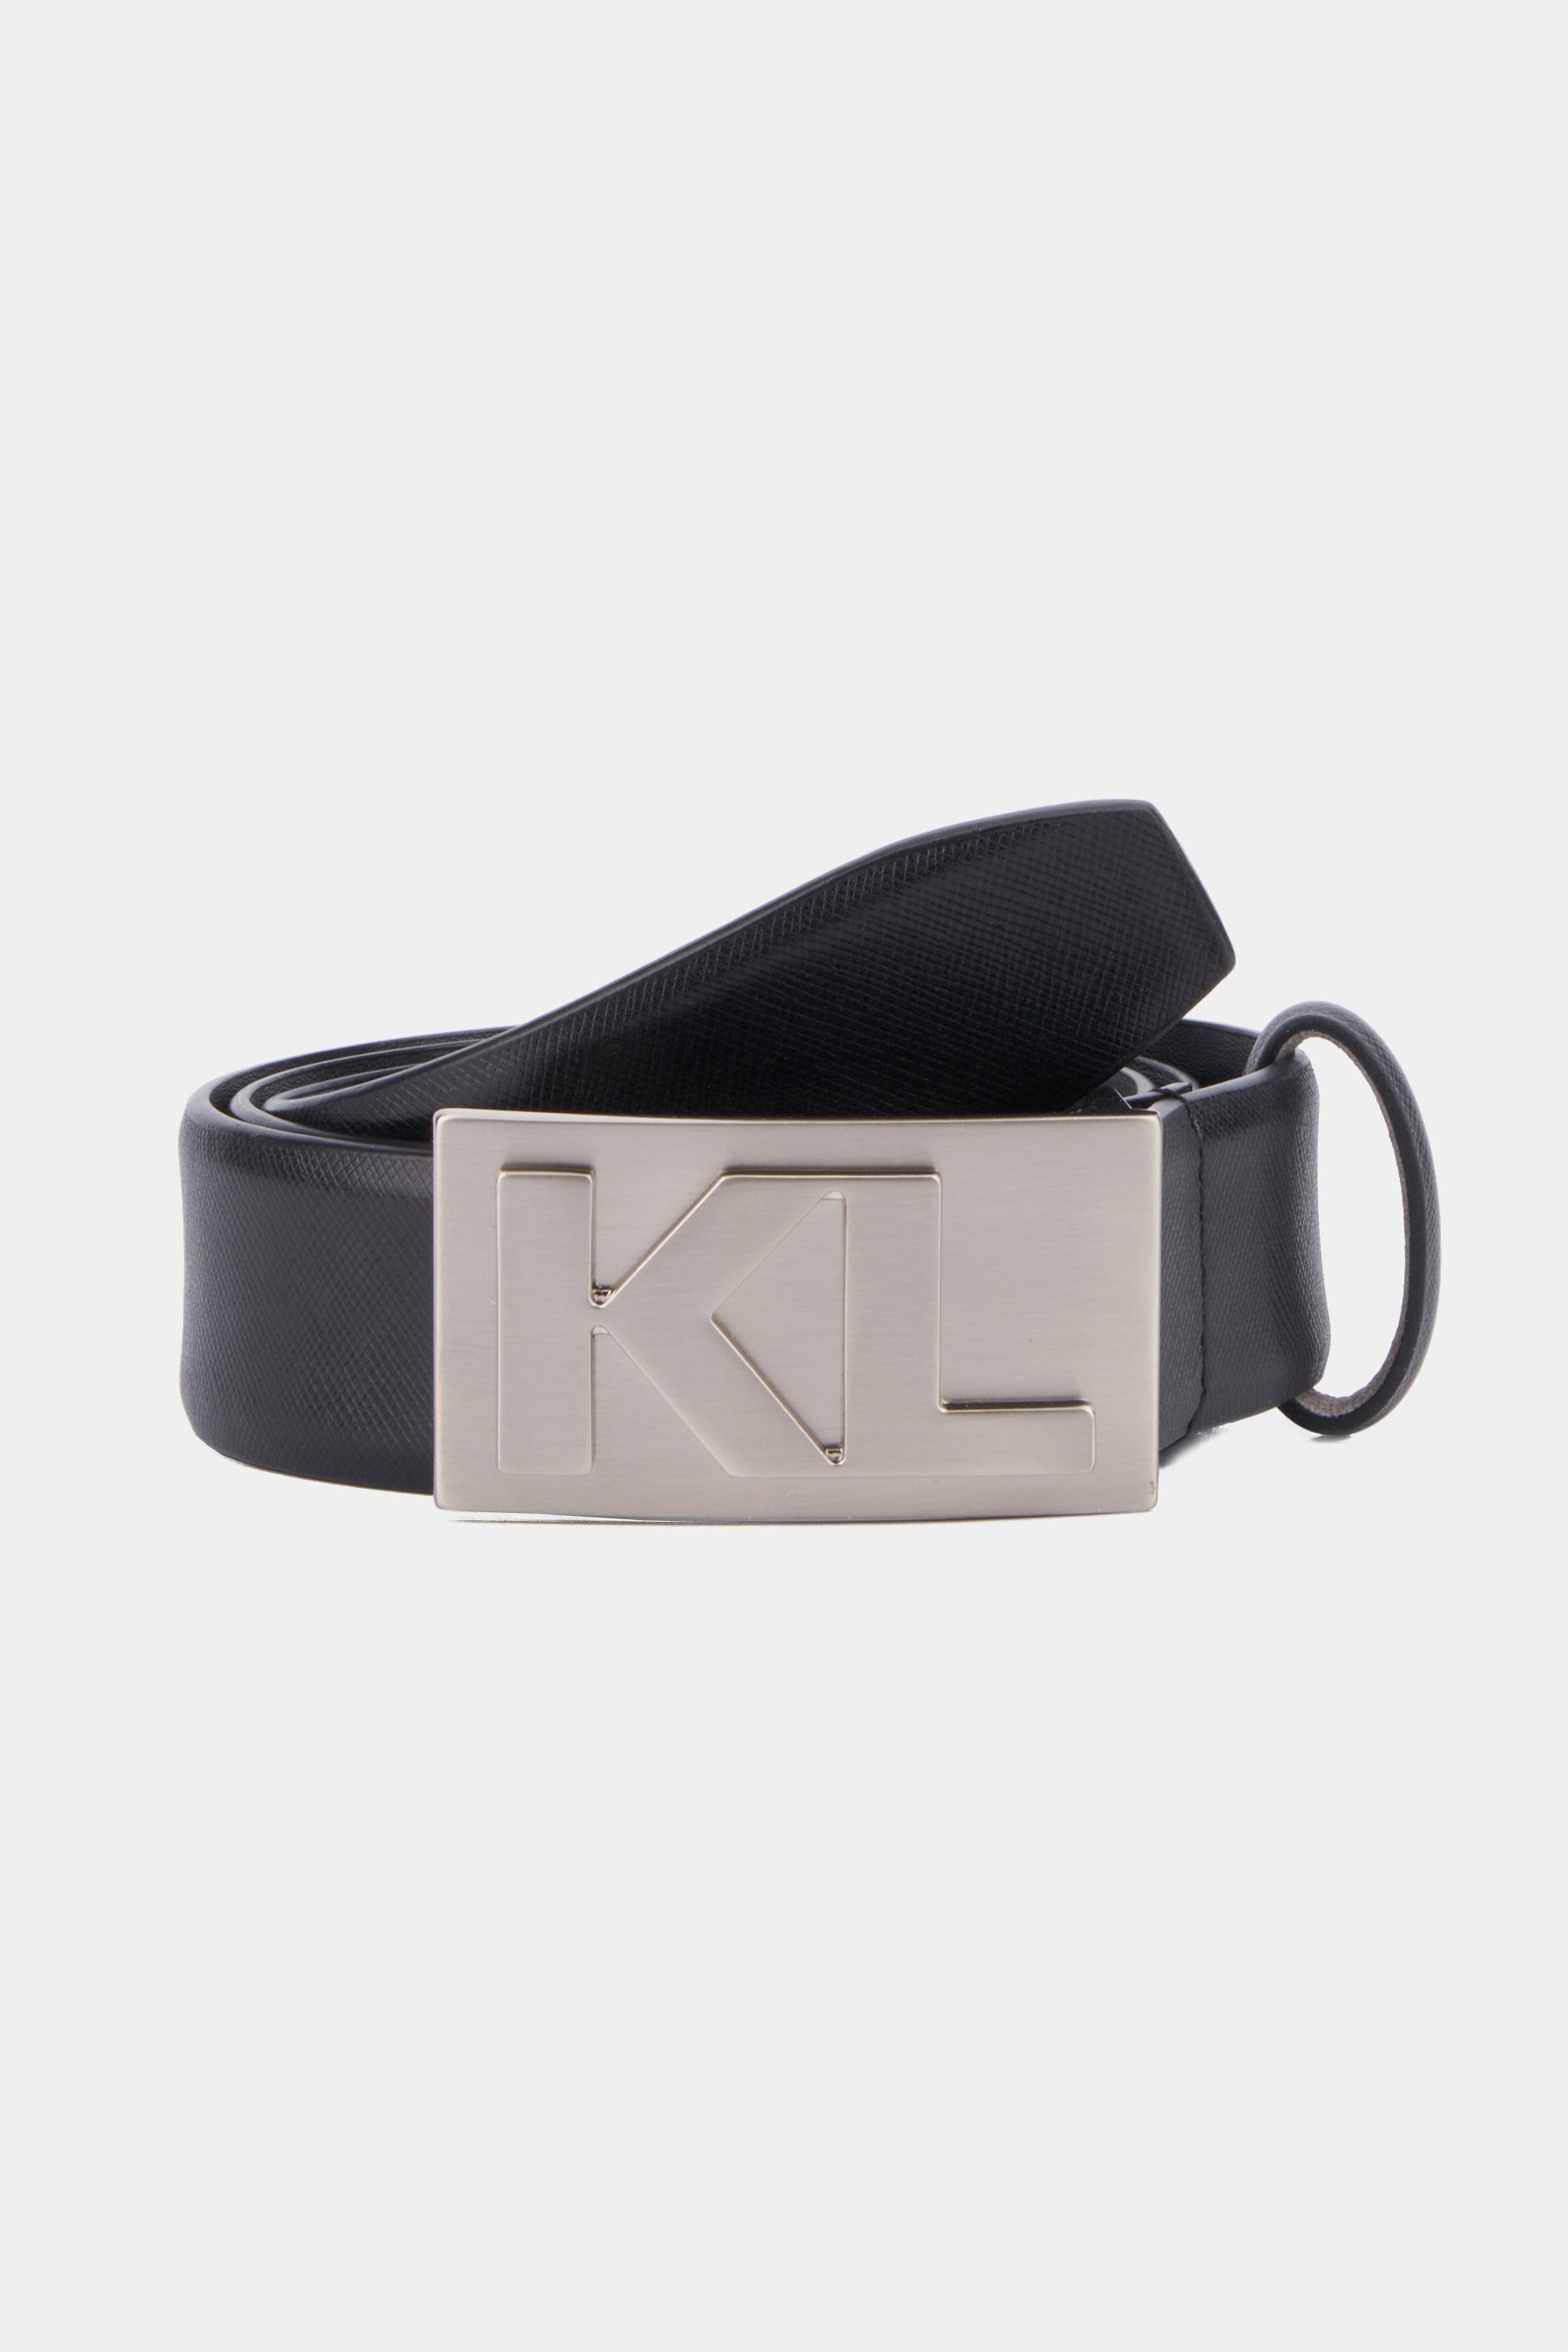 Karl Lagerfeld KL Plaque Buckle Saffiano Leather Belt in Black